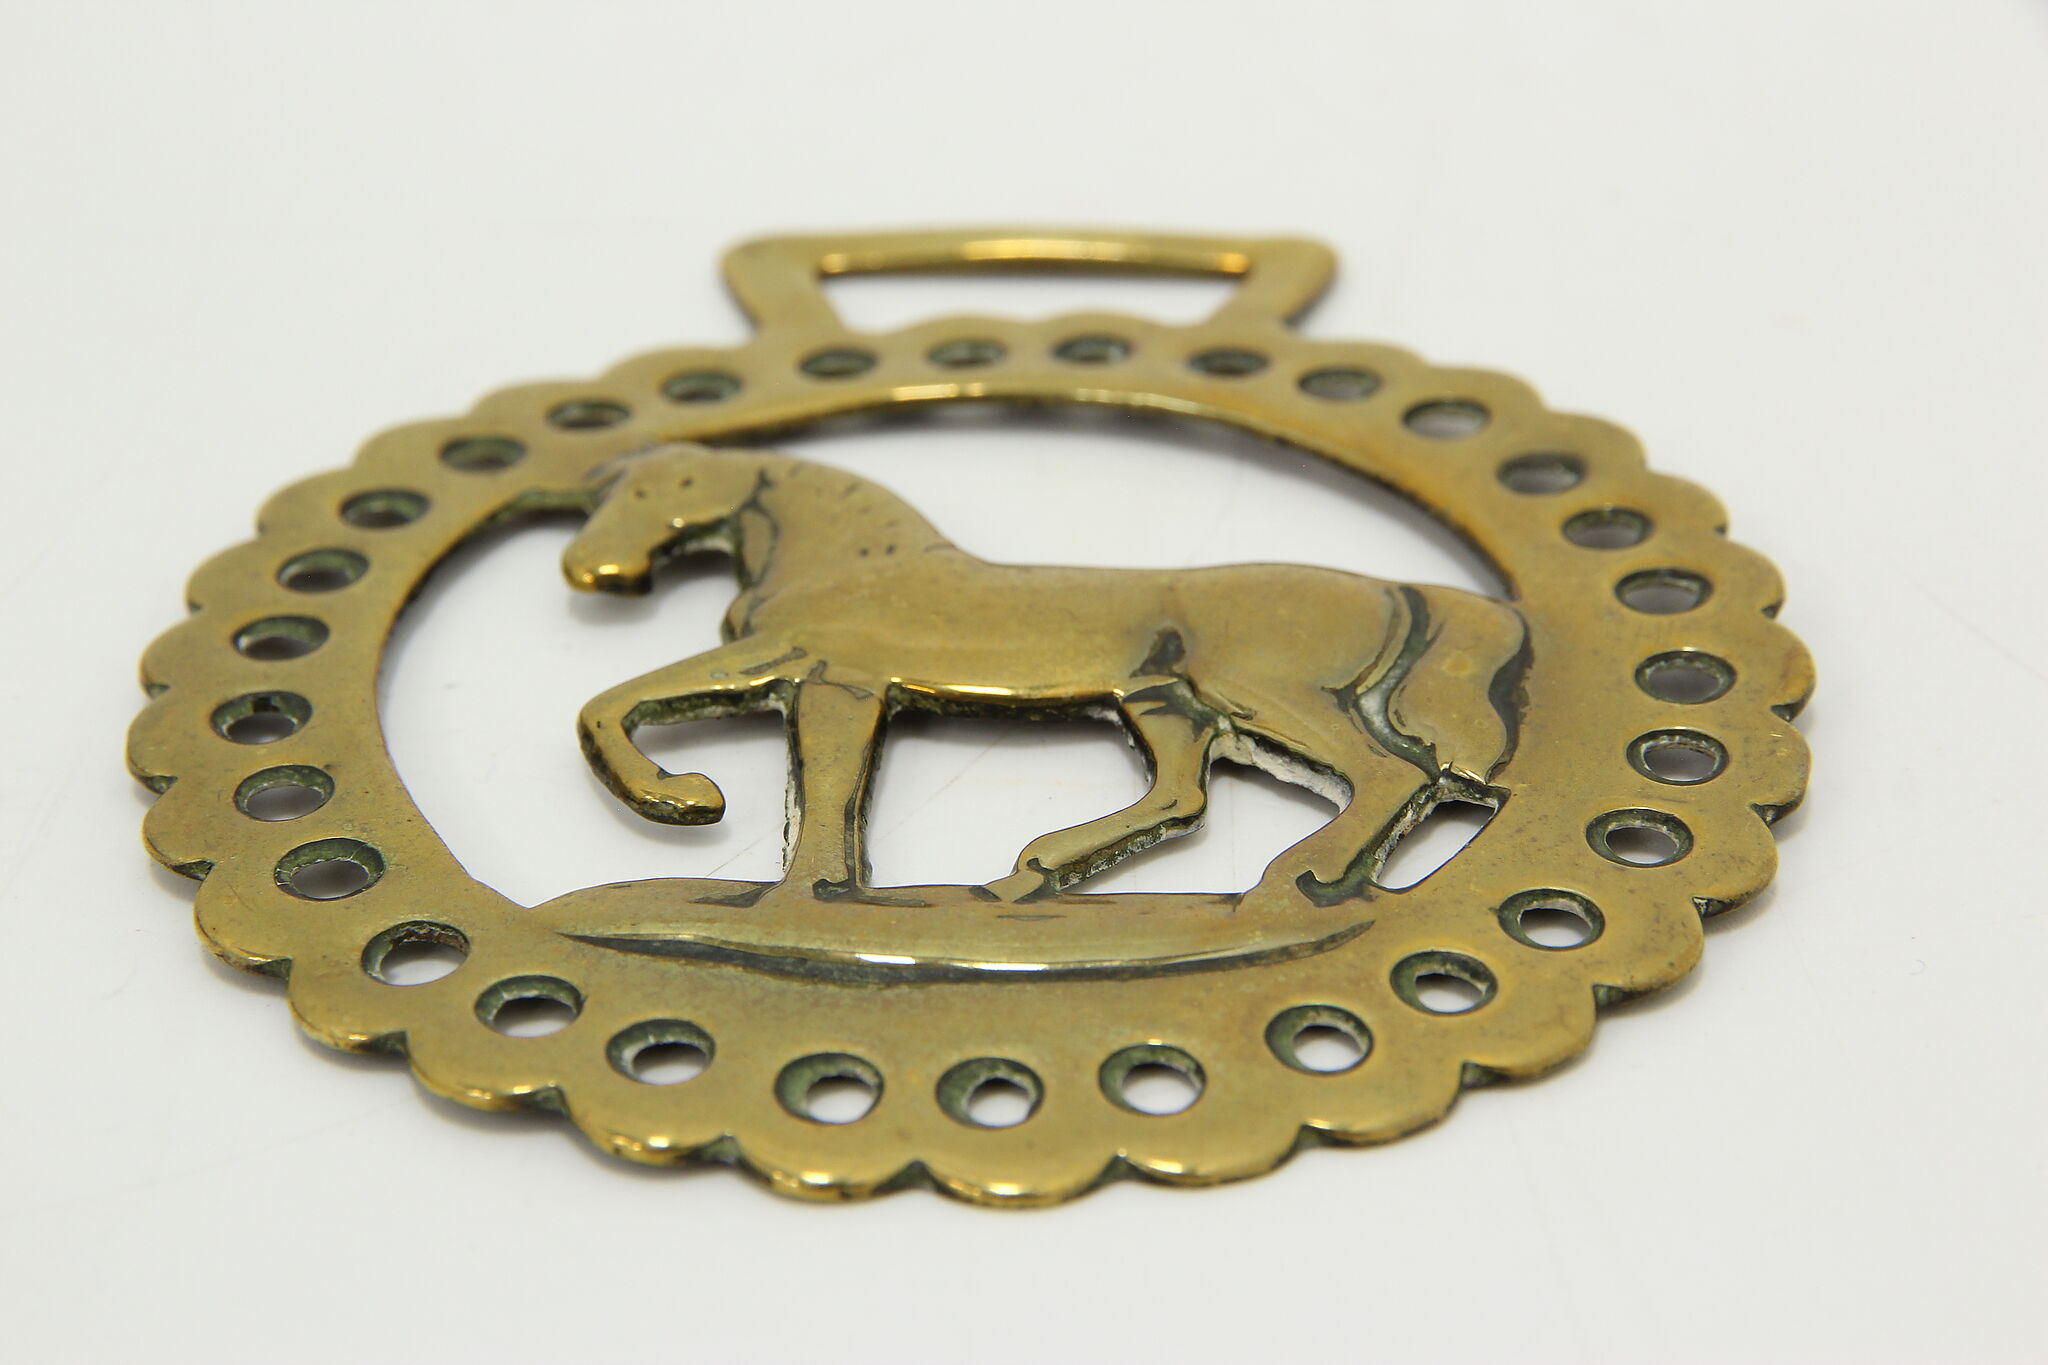 Vintage Regal Lion Brass Horse Bridle Medallion Horse Harness Crest